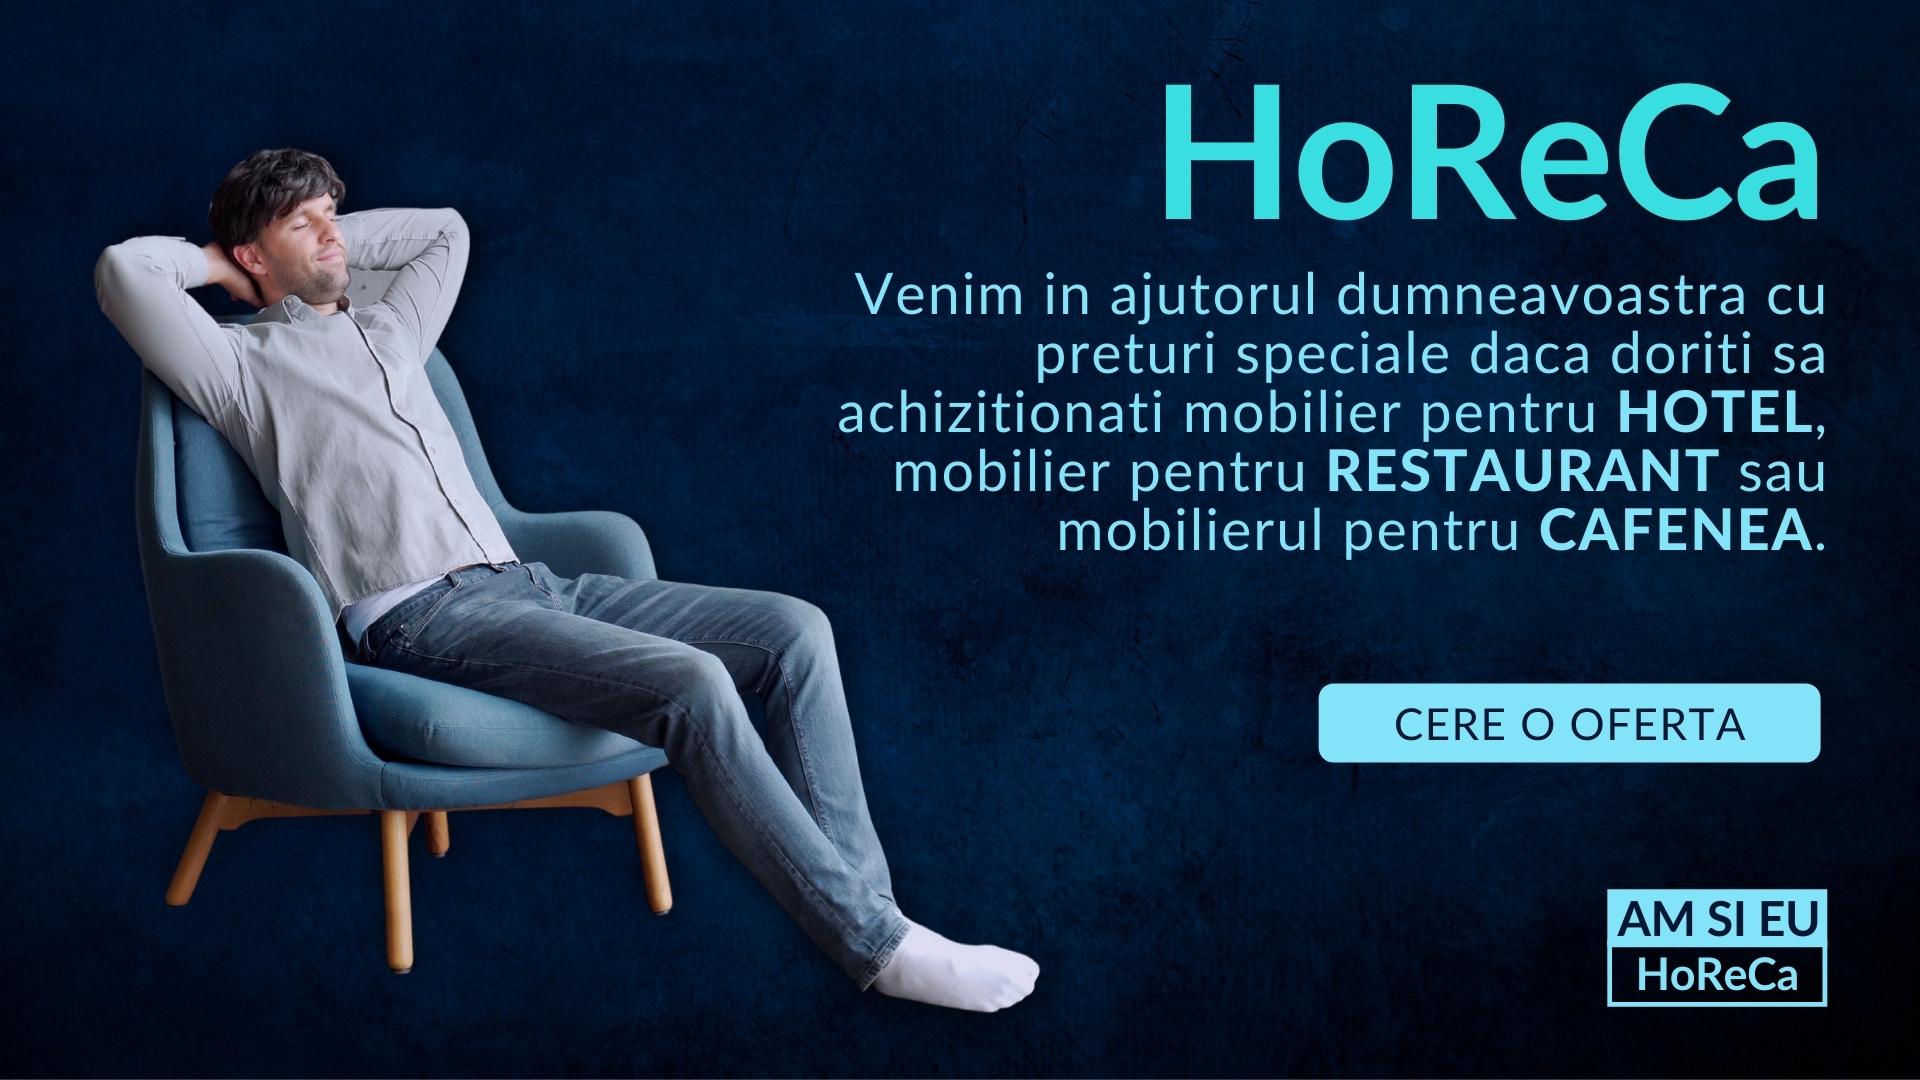 Mobilier HoReCa amsieu.ro